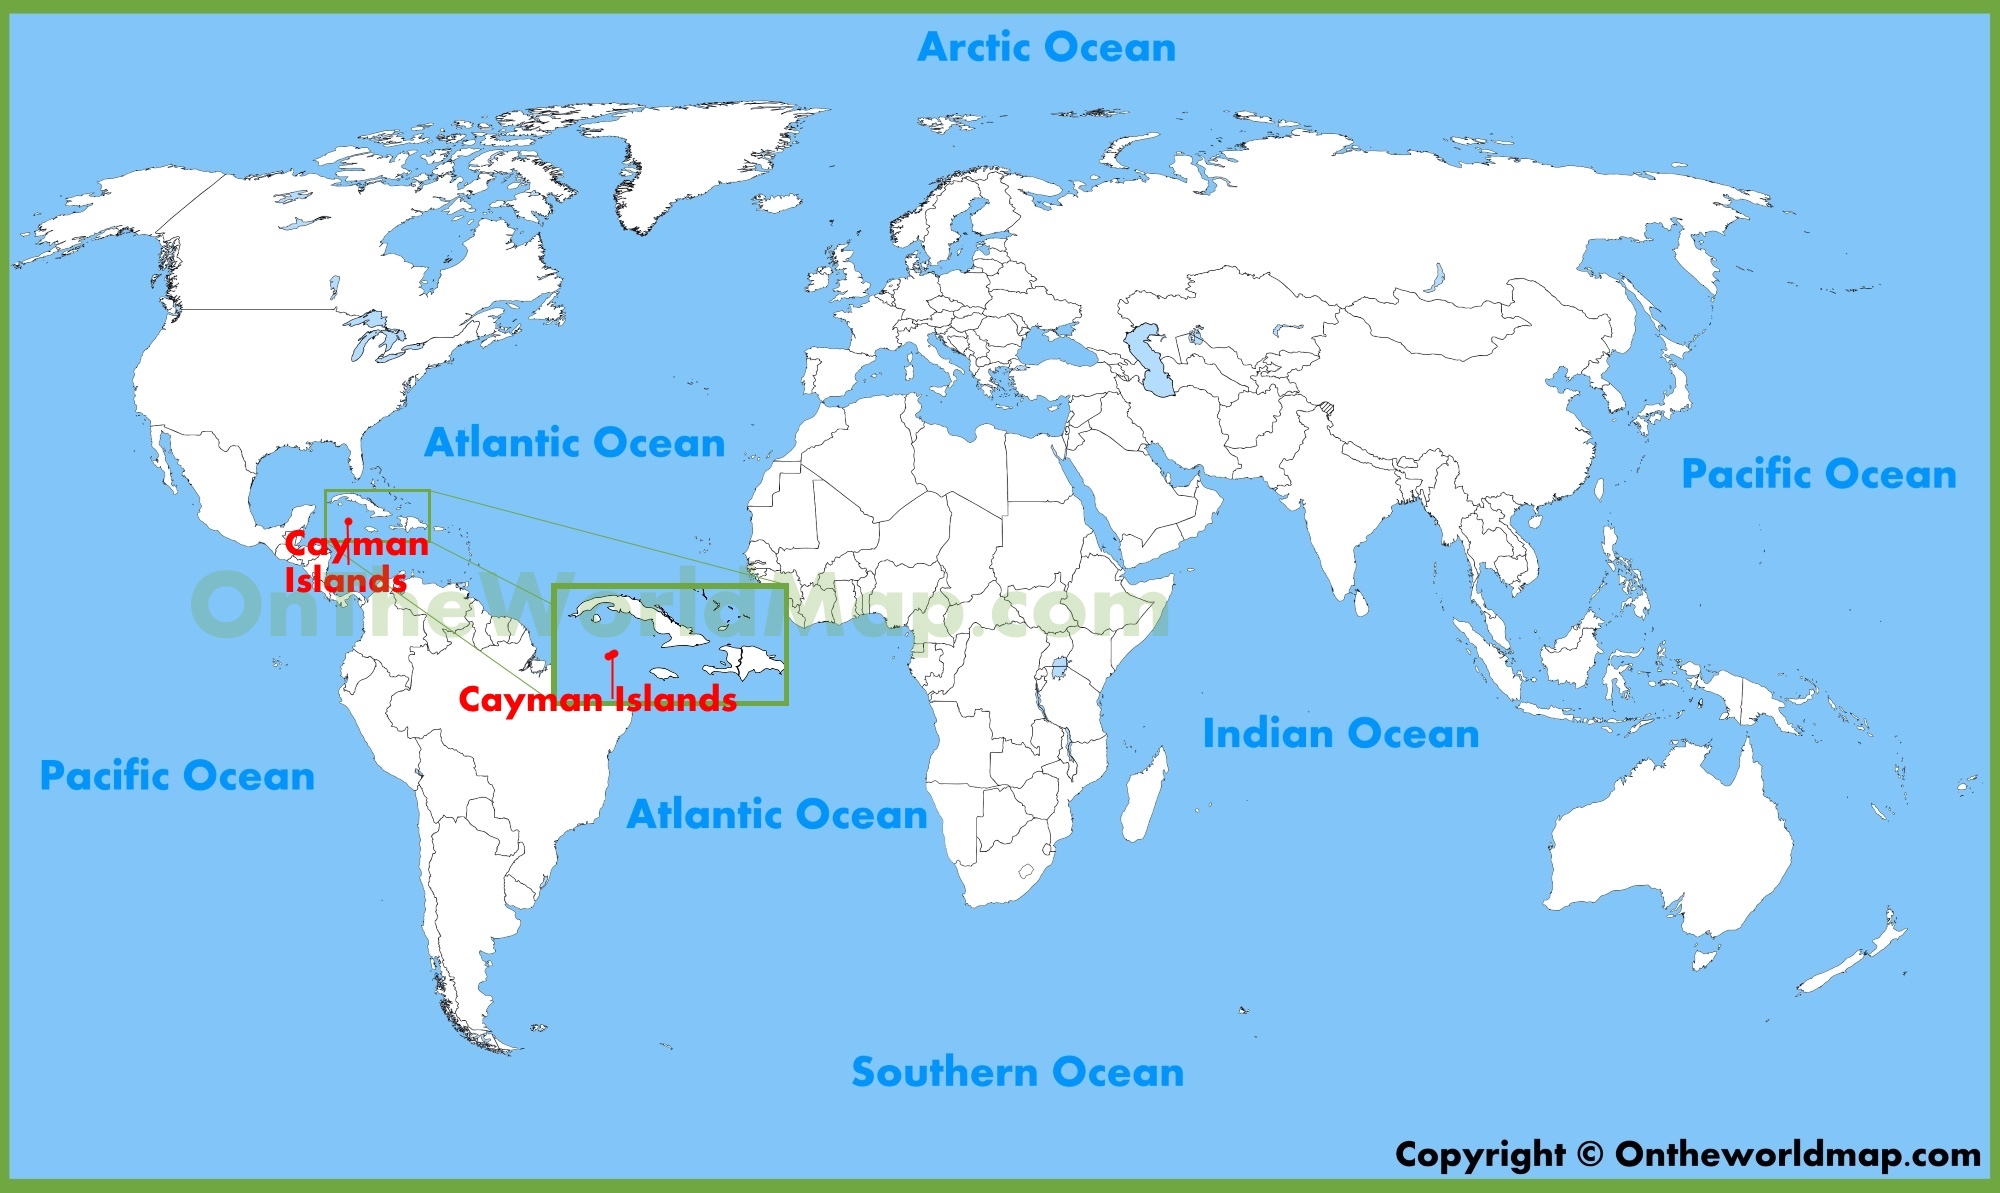 Large Tourist Map Of Grand Cayman Island Cayman Islan - vrogue.co